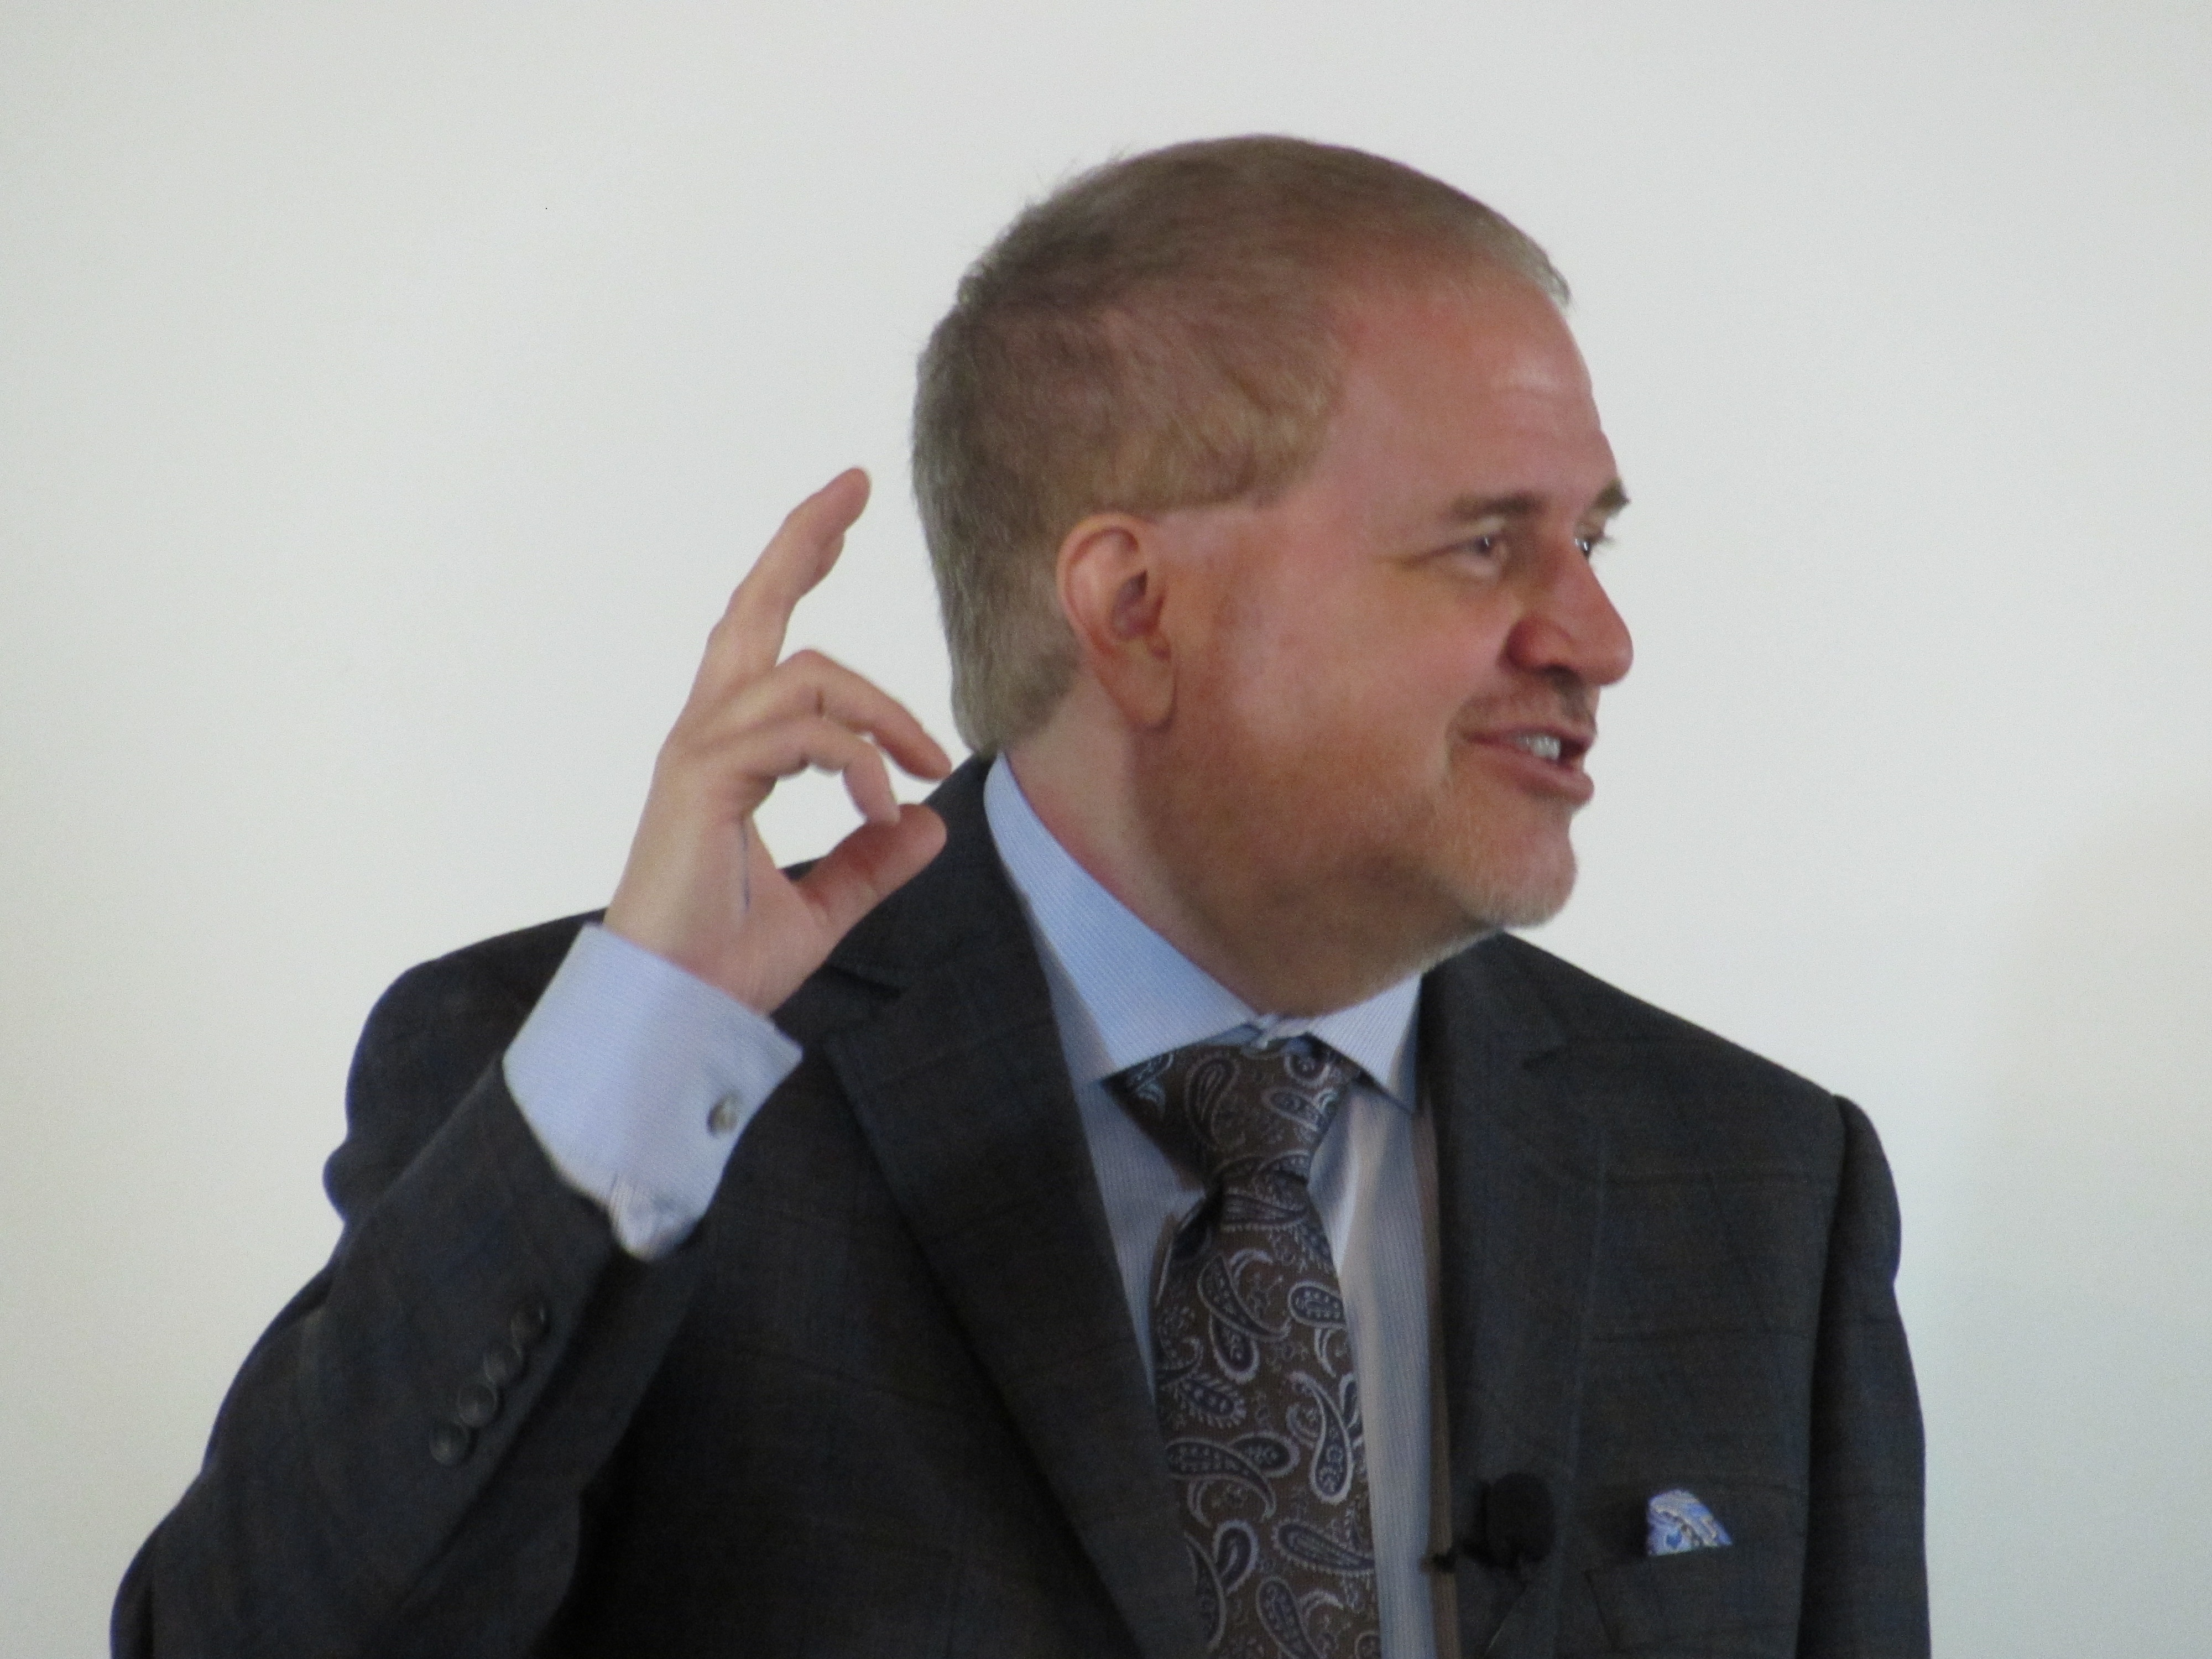 Kevin Hogan Motivational Speaker Body Language Expert Sales Influence